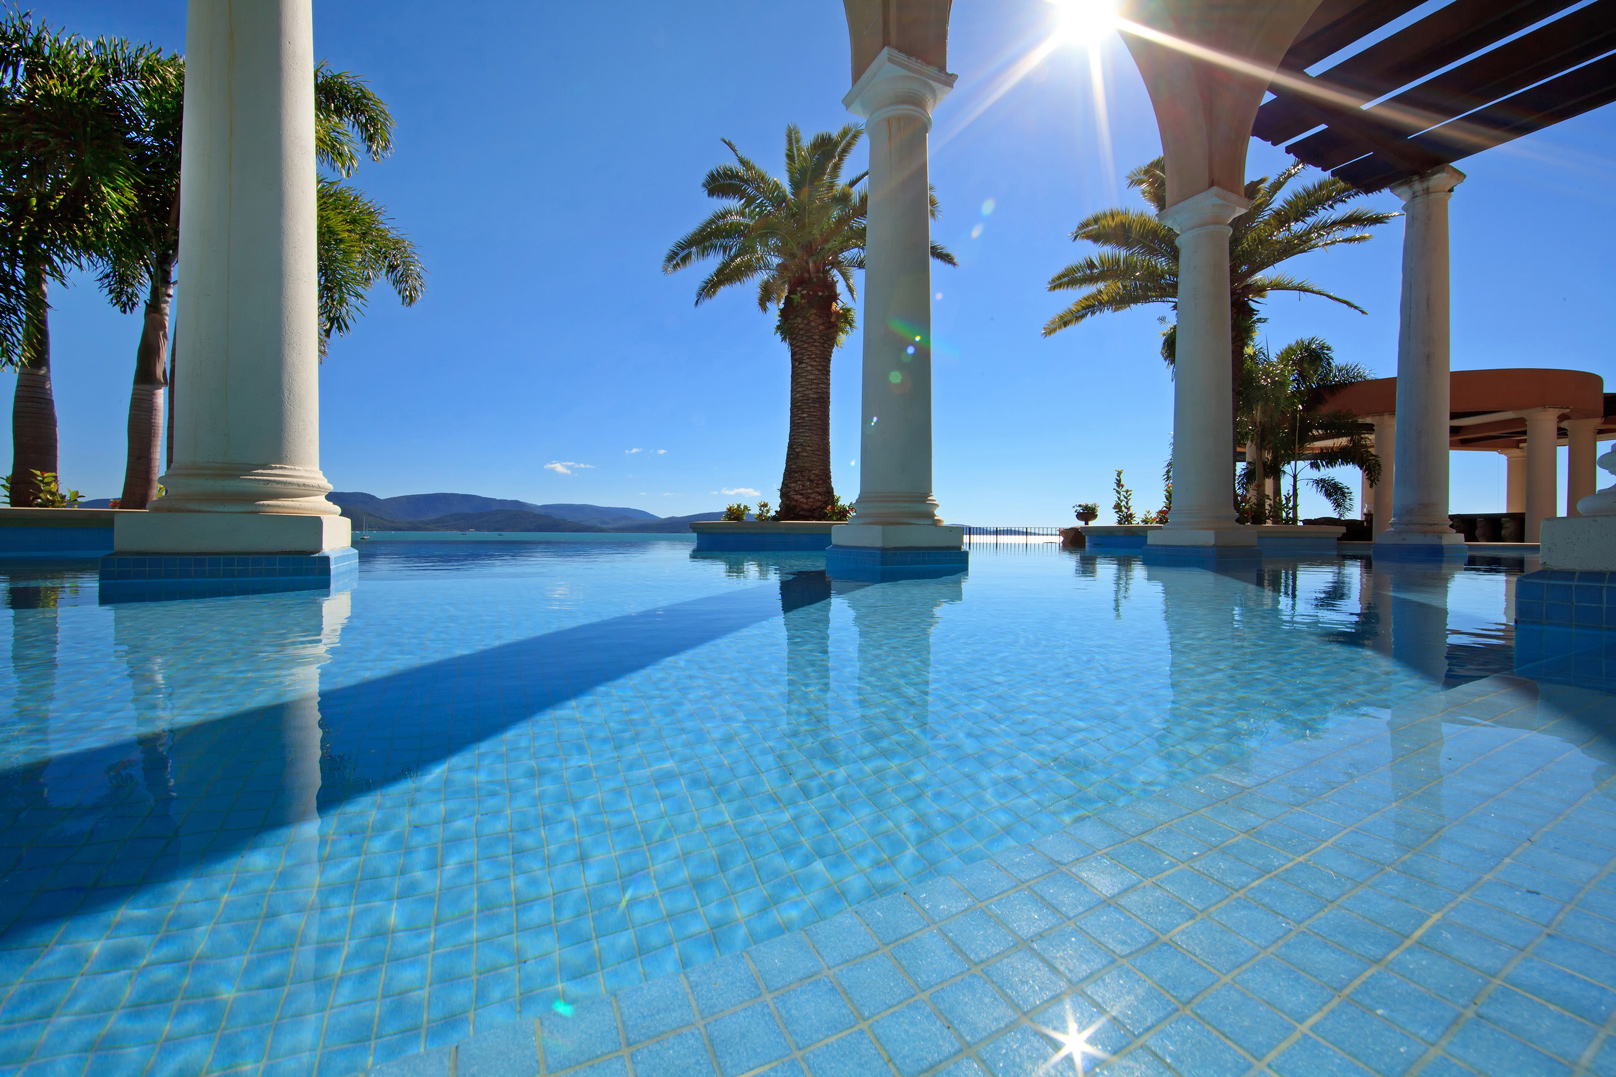 Qantas Travel Insider reviews the spectacular Villa Del Mare